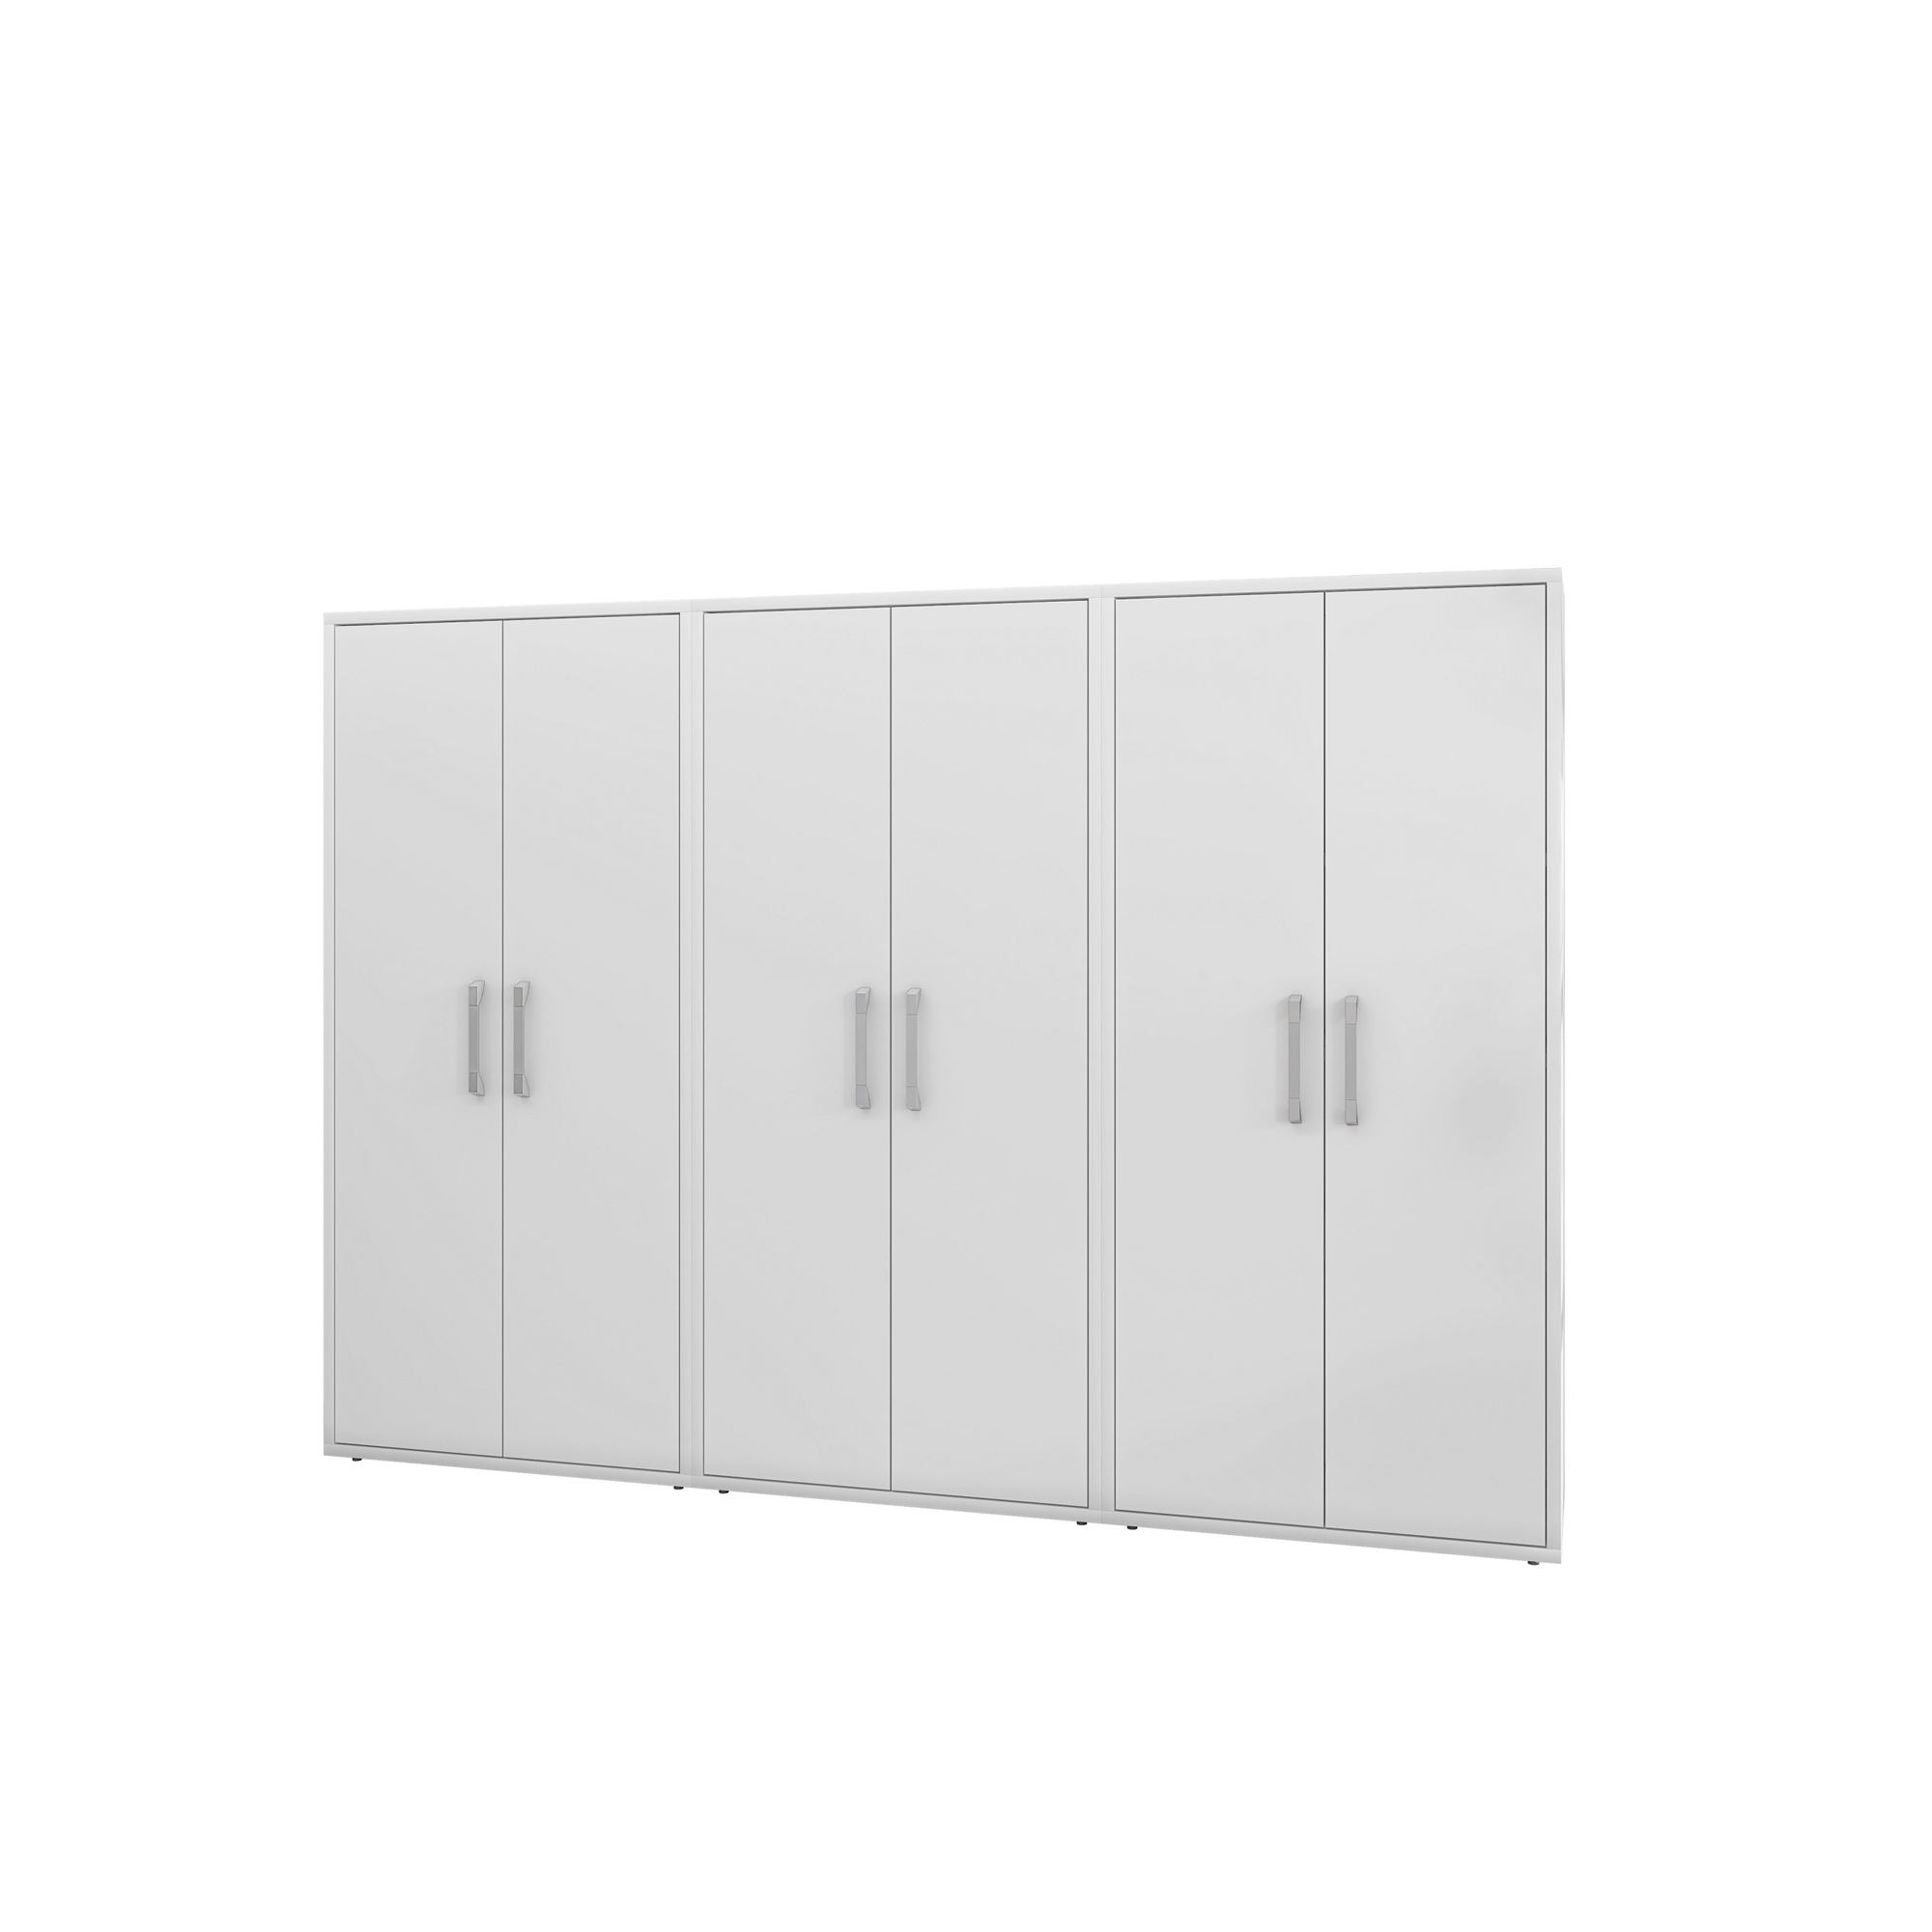 Manhattan Comfort, Eiffel Storage Cabinet in White, Set of 3 Height 73.43 in, Width 106.29 in, Color White, Model 3-250BMC